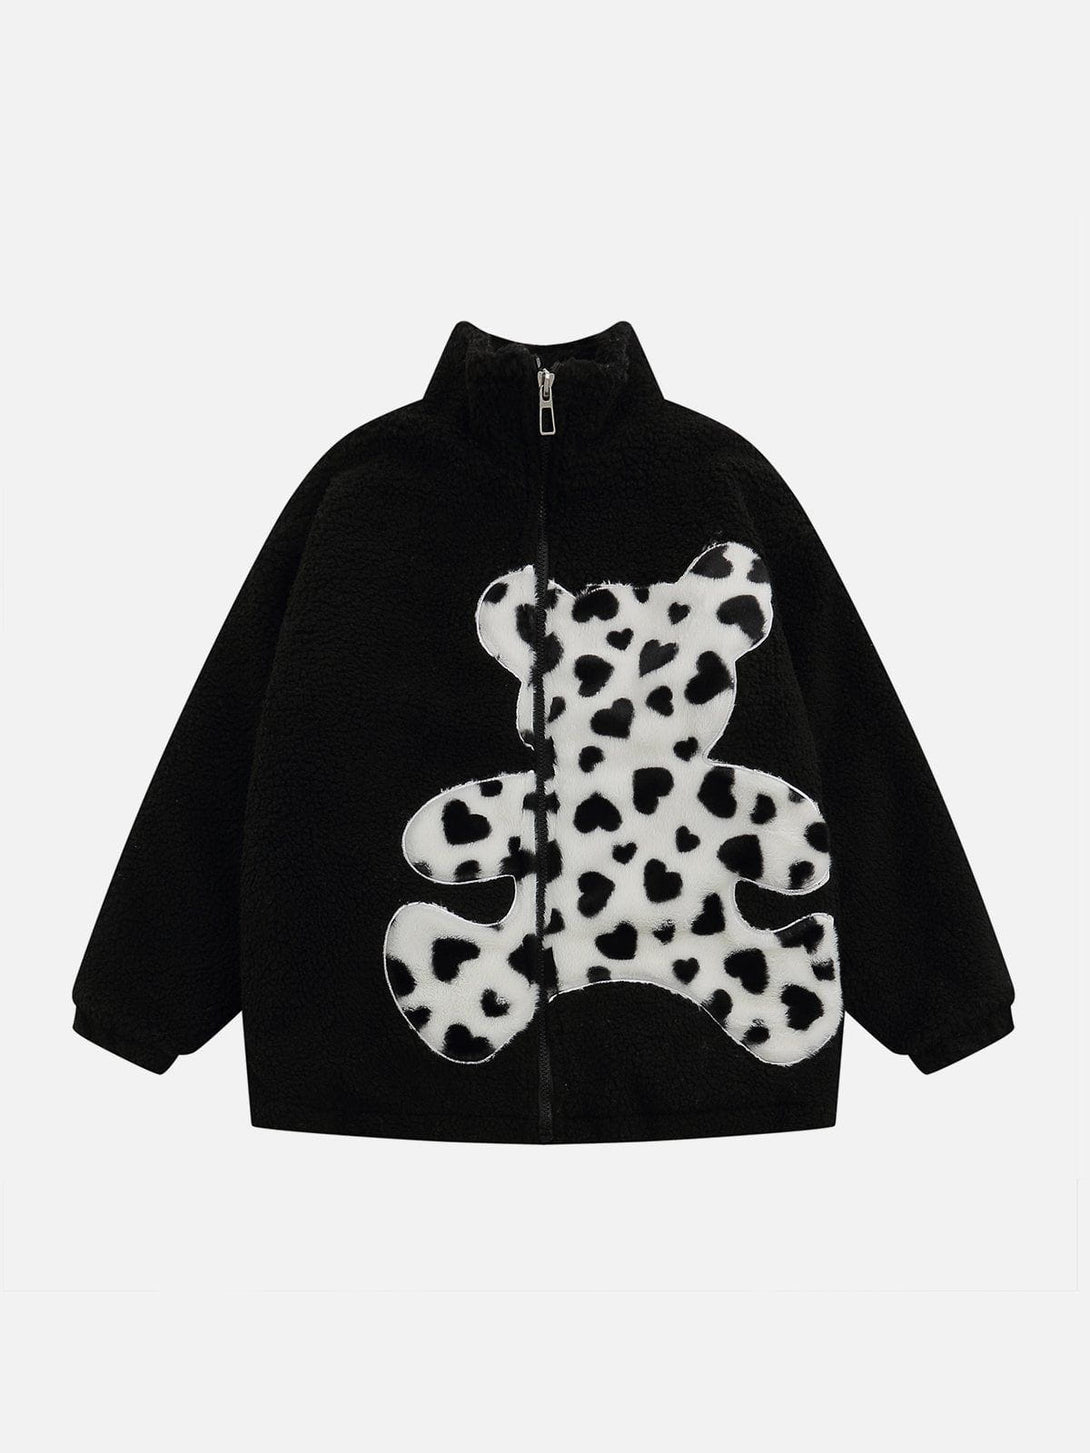 Majesda® - Embroidered Plush Bear Sherpa Coat outfit ideas streetwear fashion